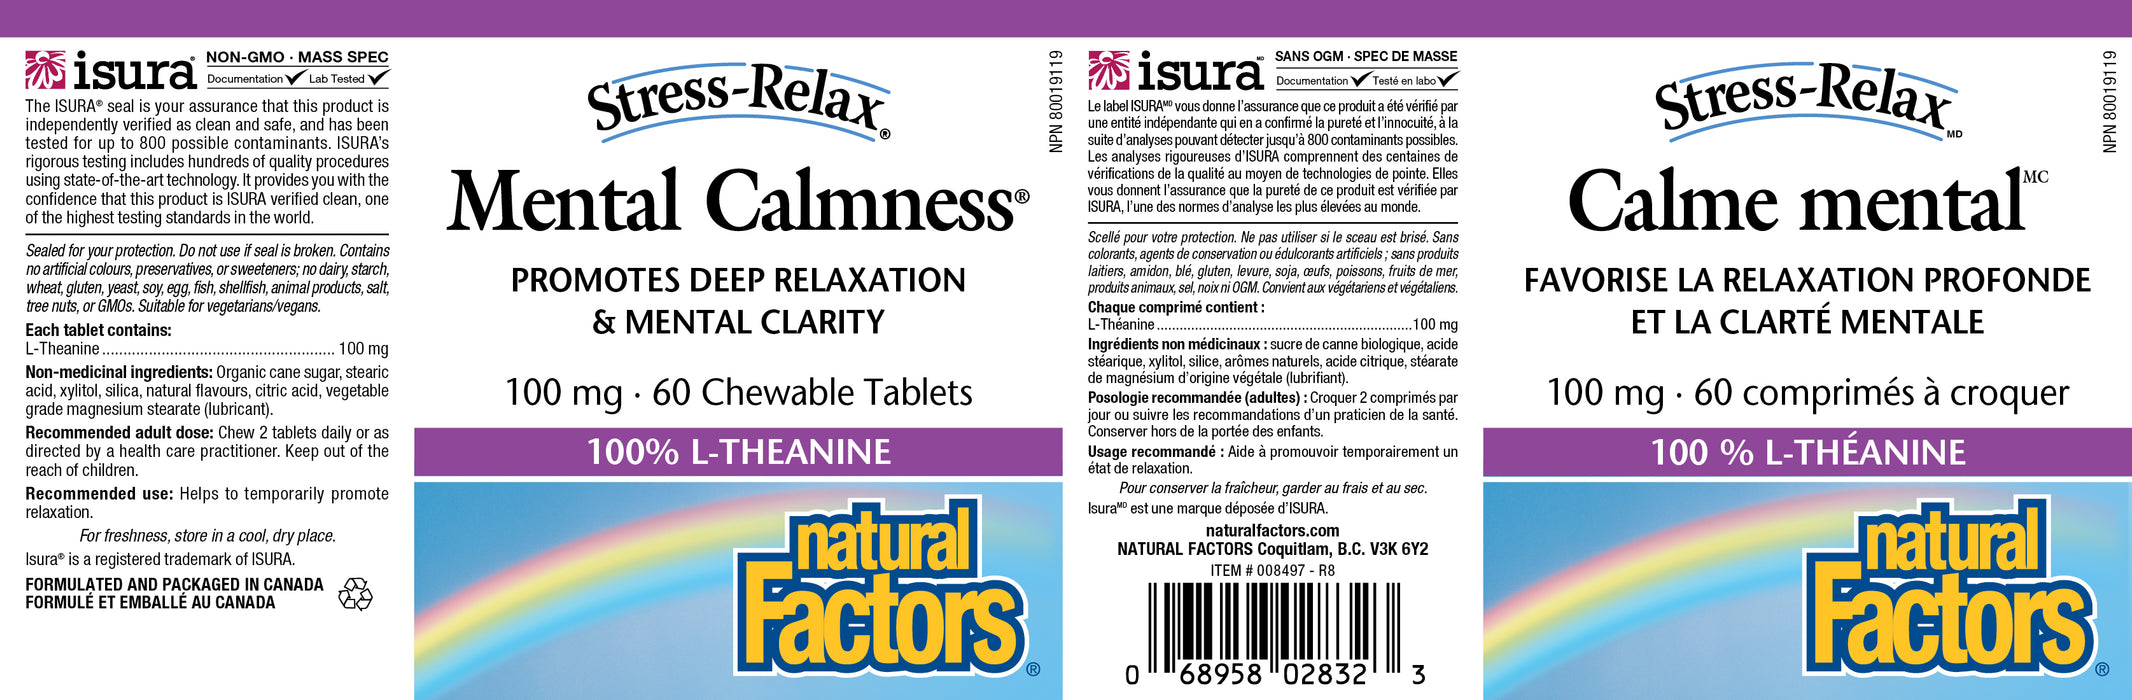 Natural Factors Stress-Relax Mental Calmness 100mg 60 Chewable Tablets